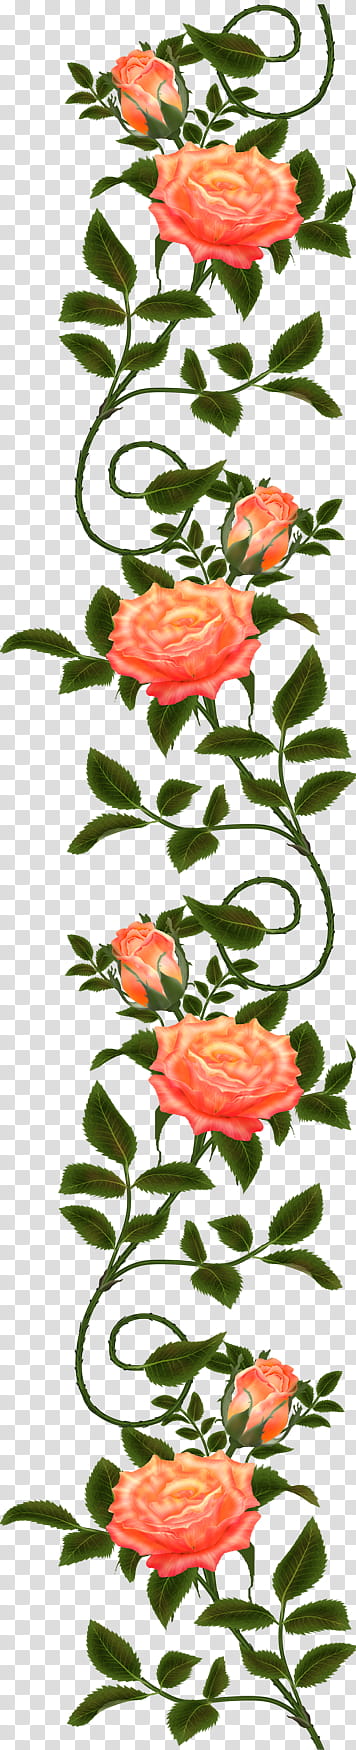 orange and green rose flowers illustration transparent background PNG clipart